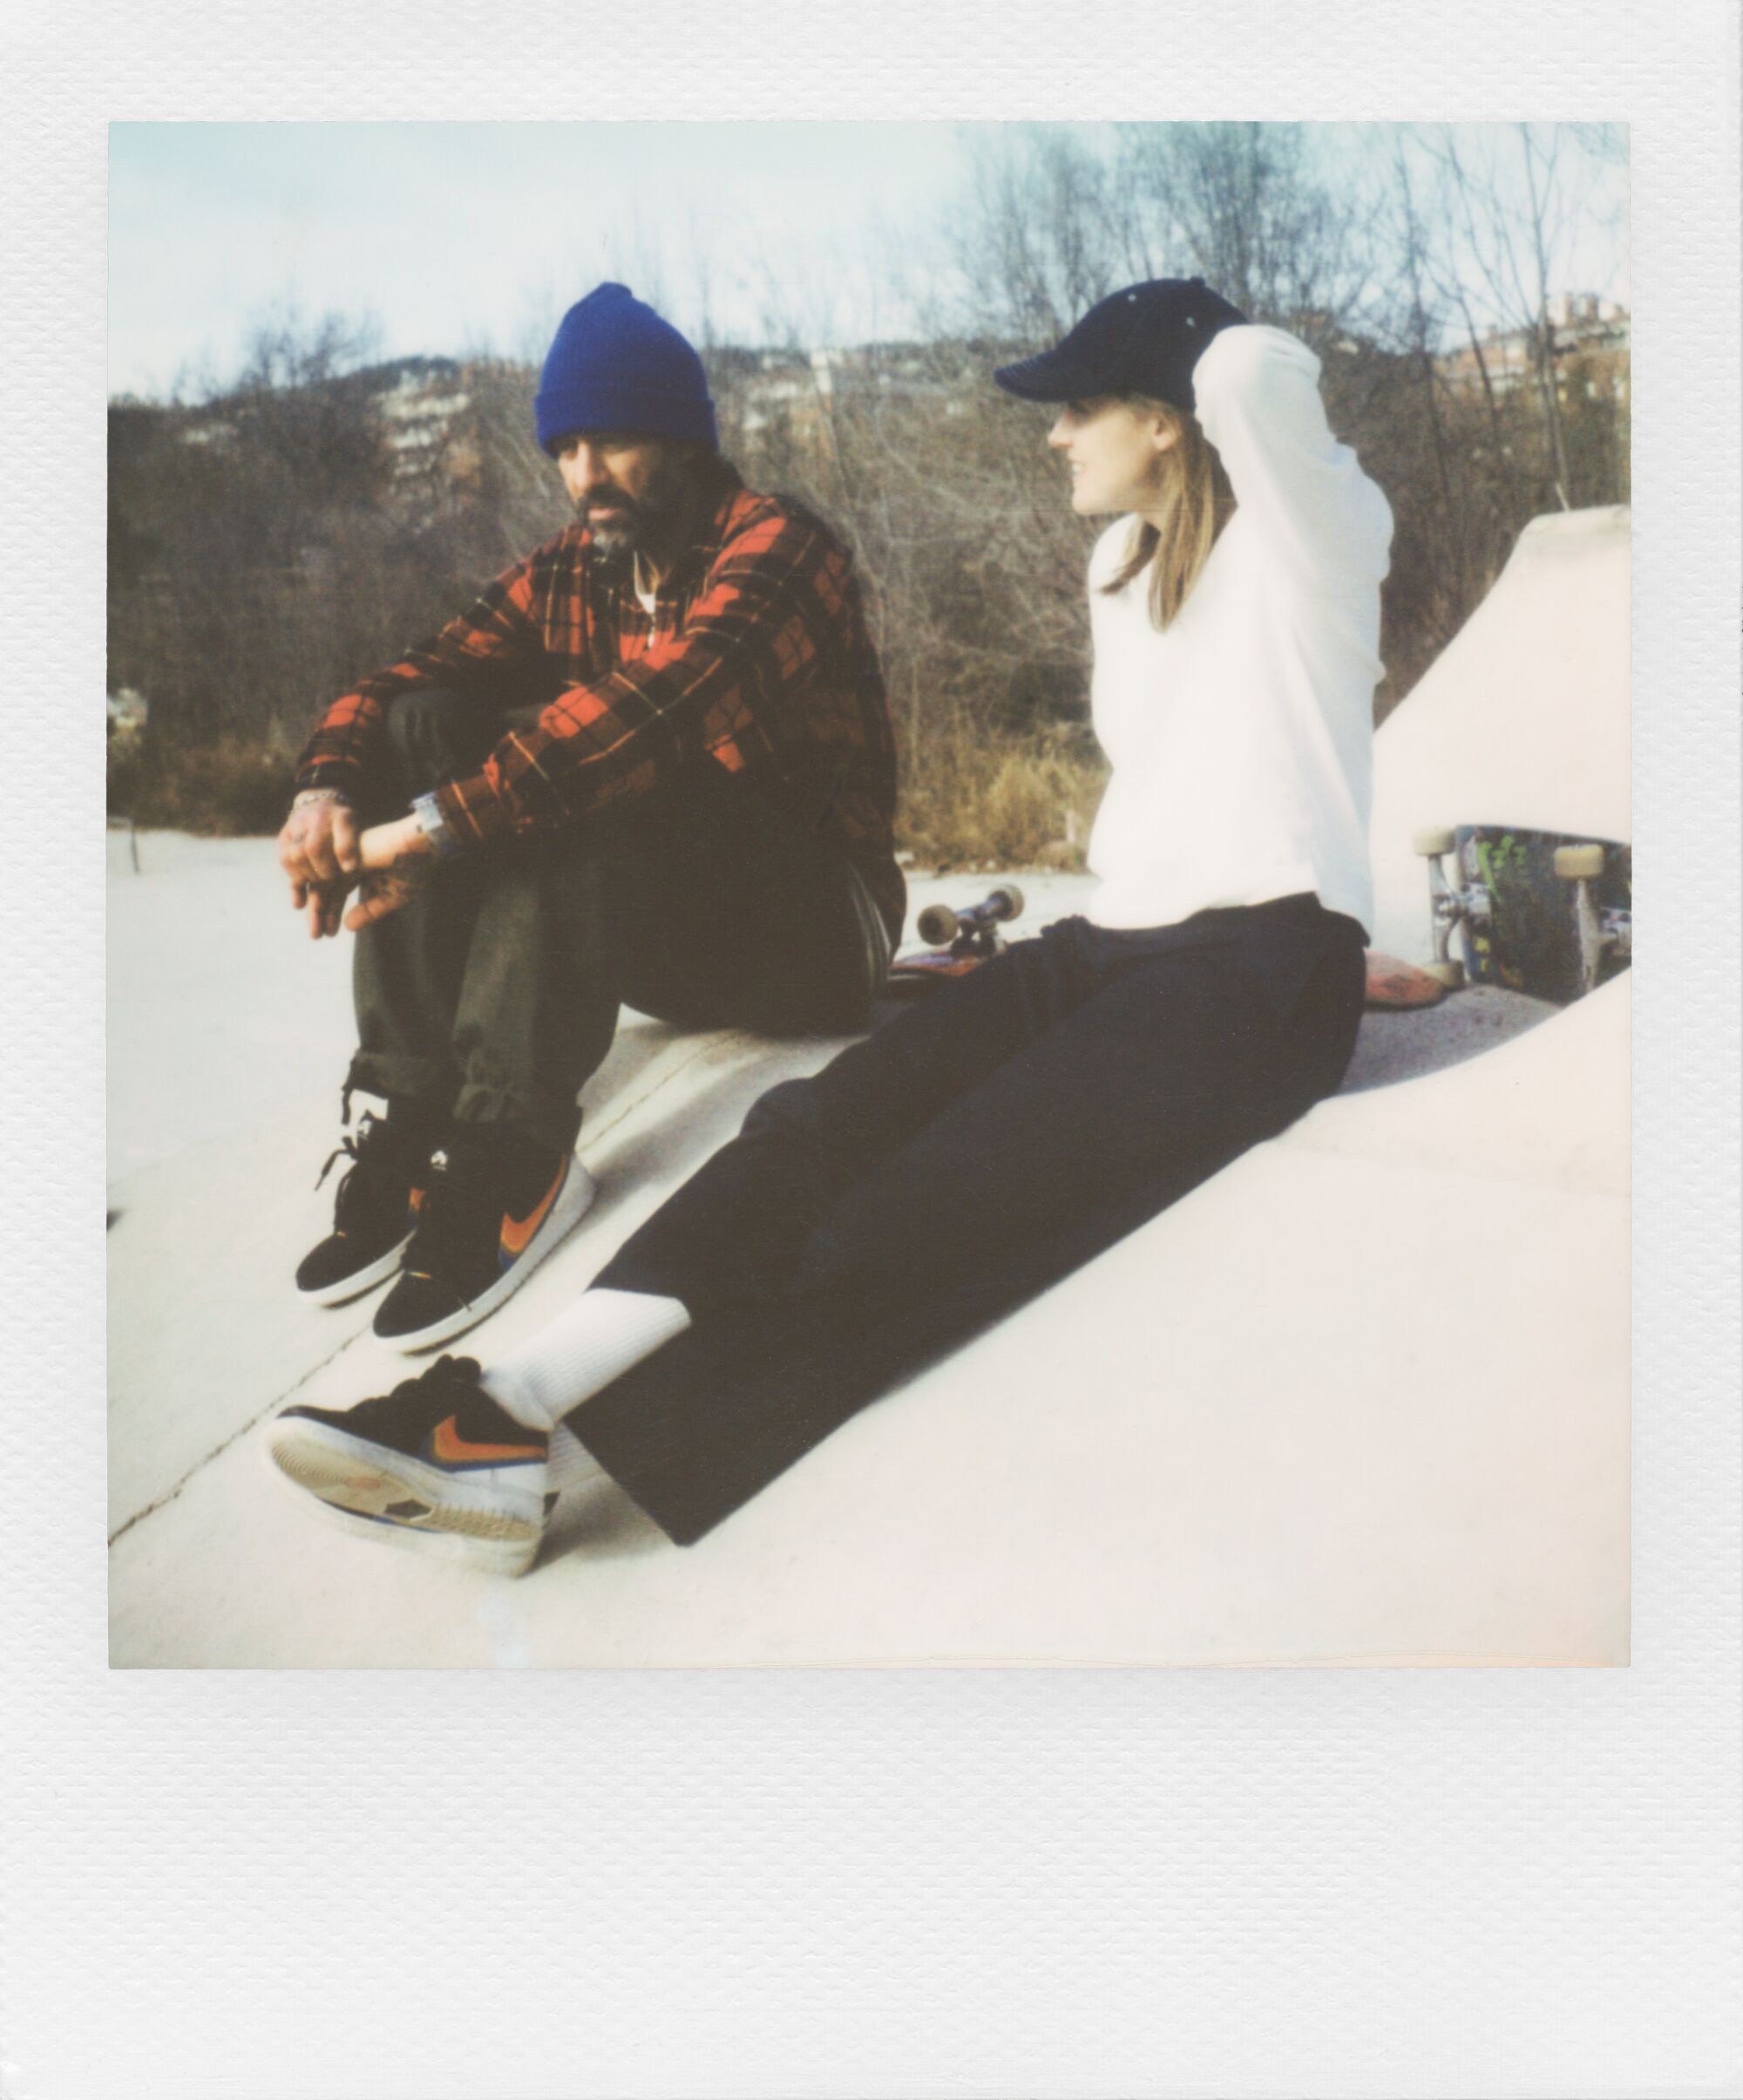 Polaroid photo of Nike SB skateboarders Sarah Muerle and Brian Anderson.